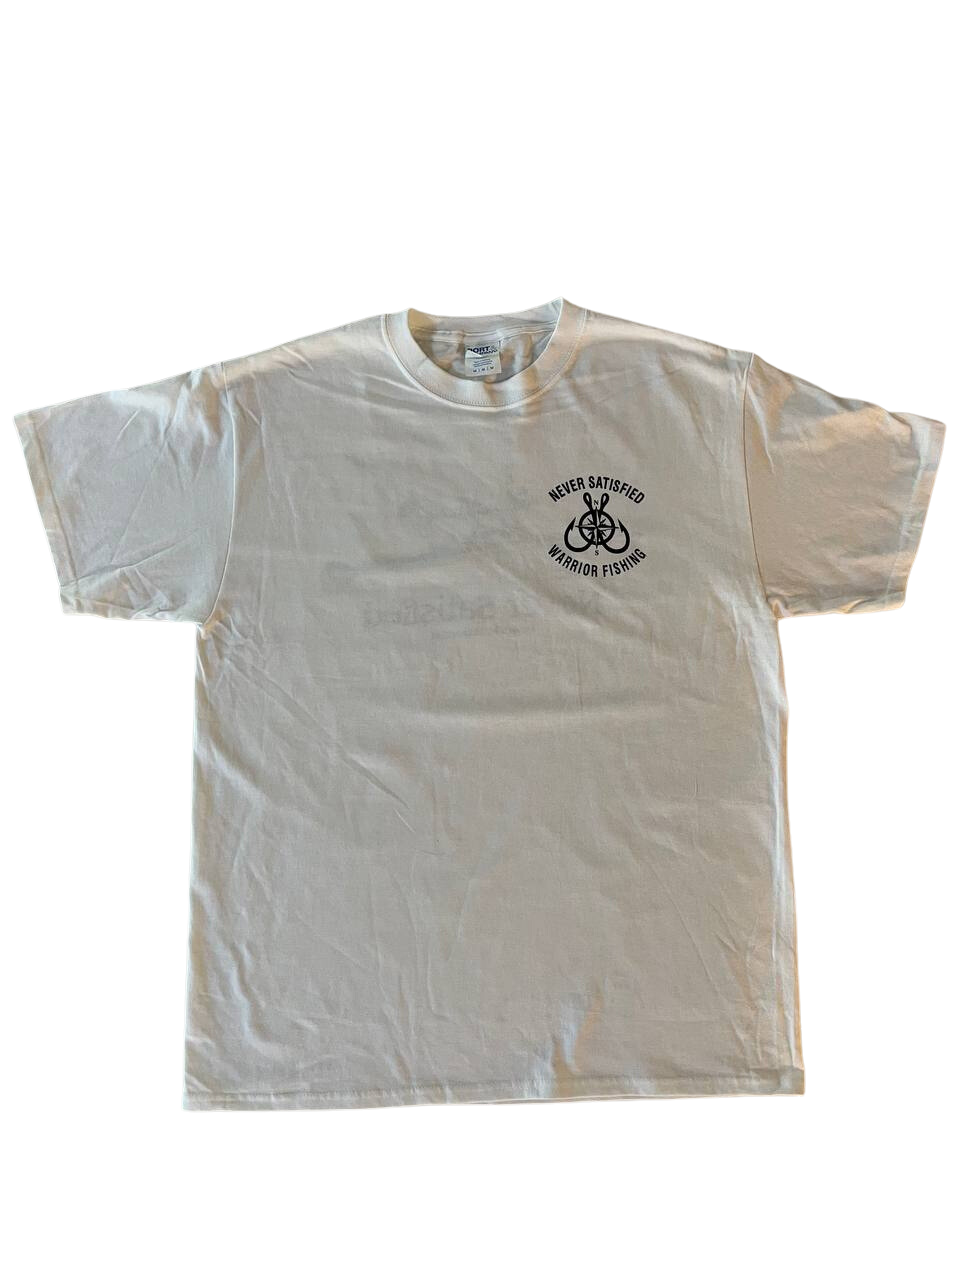 Never Satisfied Warrior Fishing Boat Shirt (White)